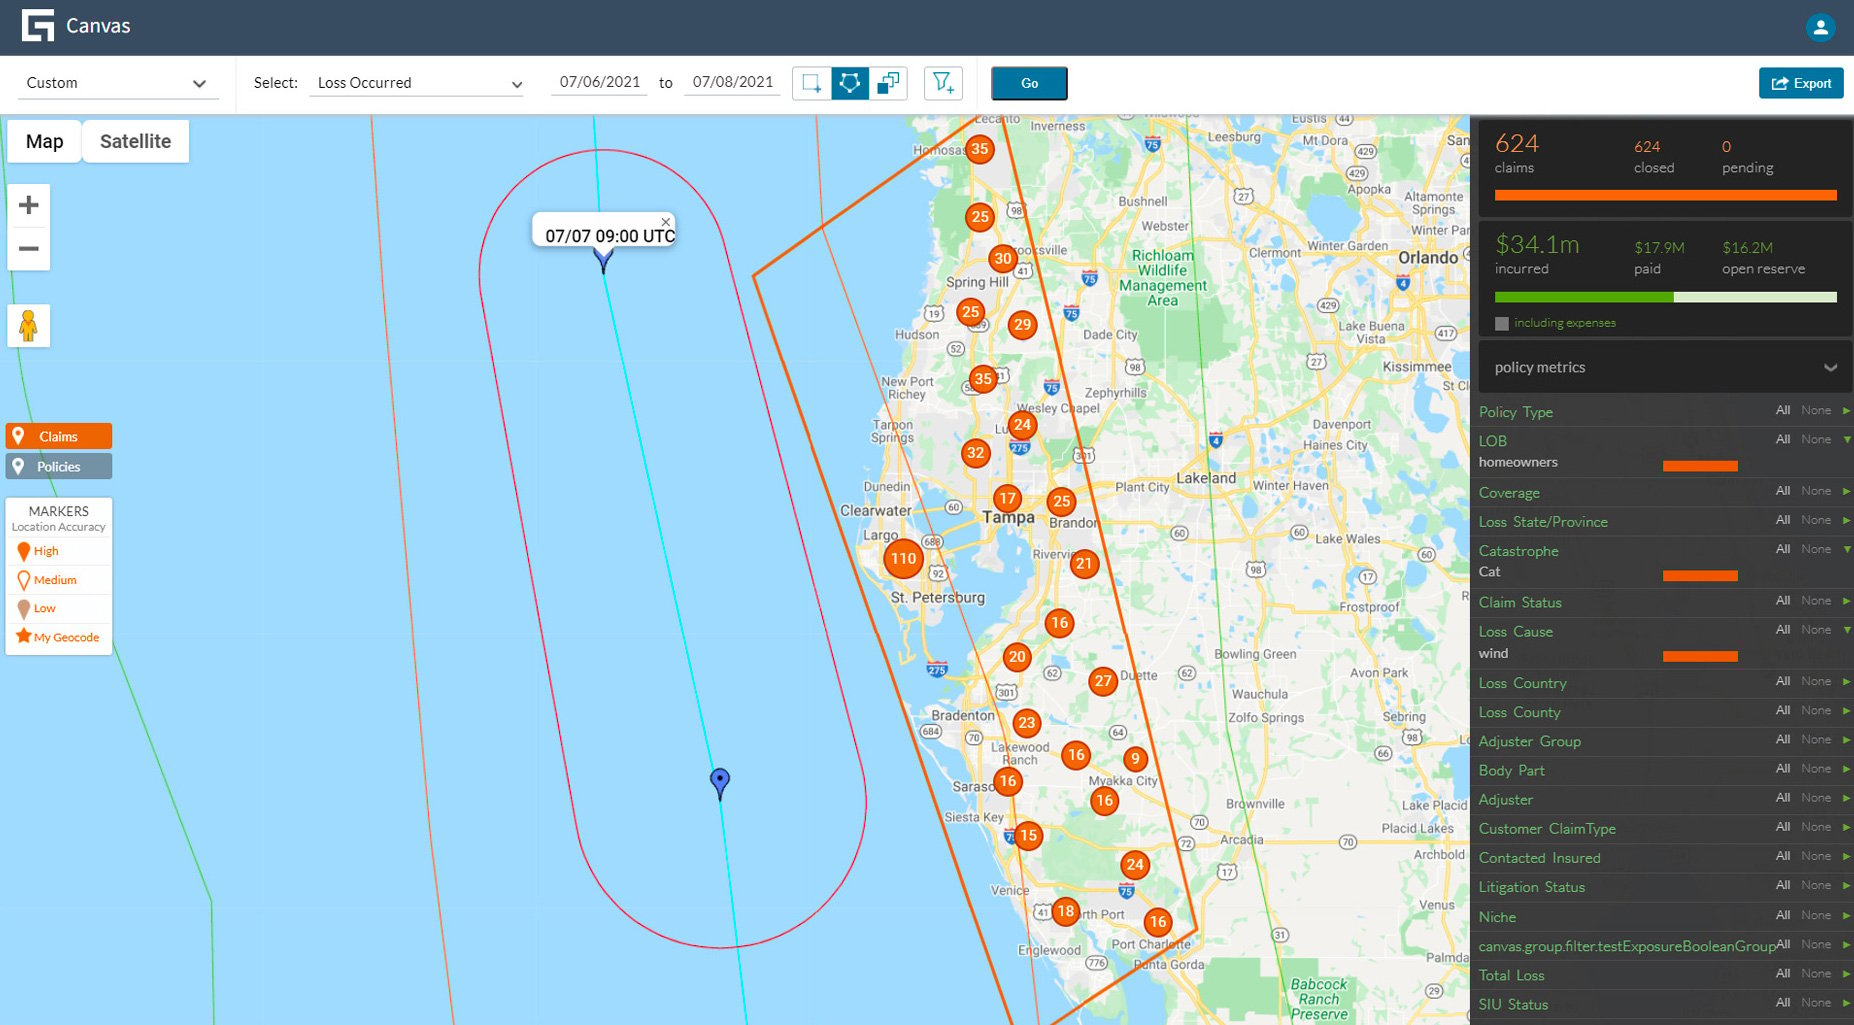 Canvas portal - Catastrophe response view of Tampa, Florida area